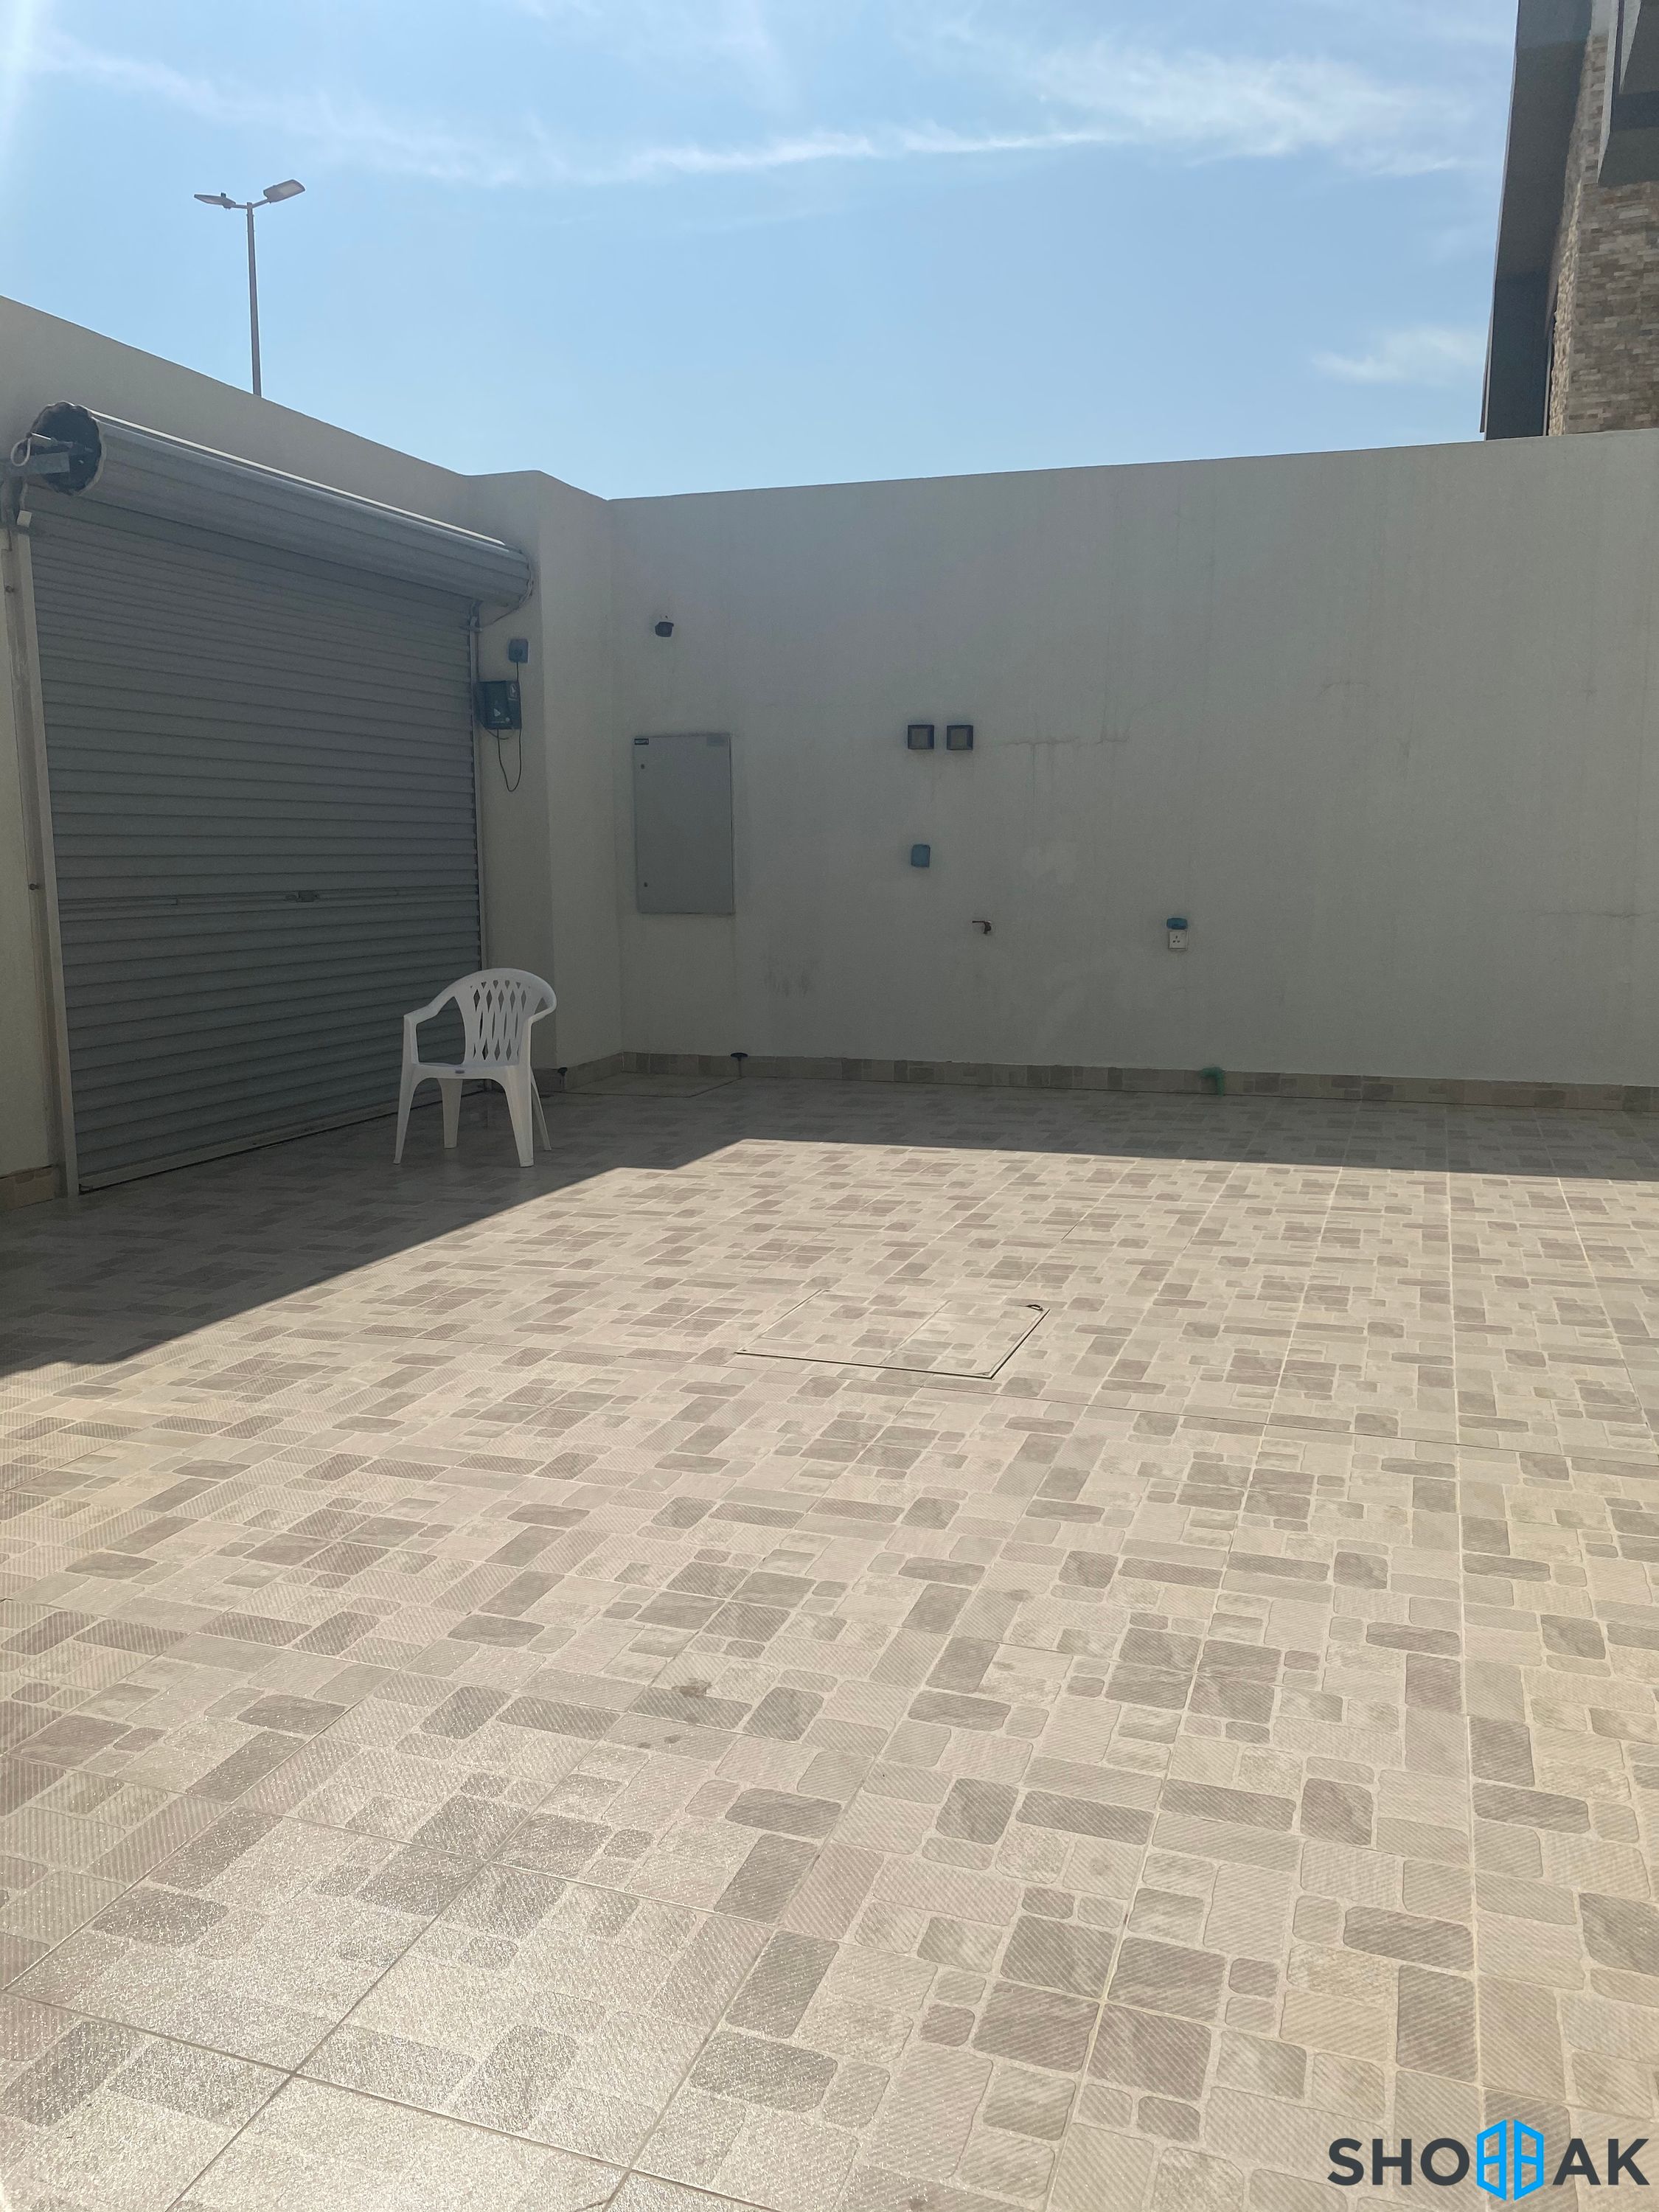 Property For Sale in Dammam Shobbak Saudi Arabia